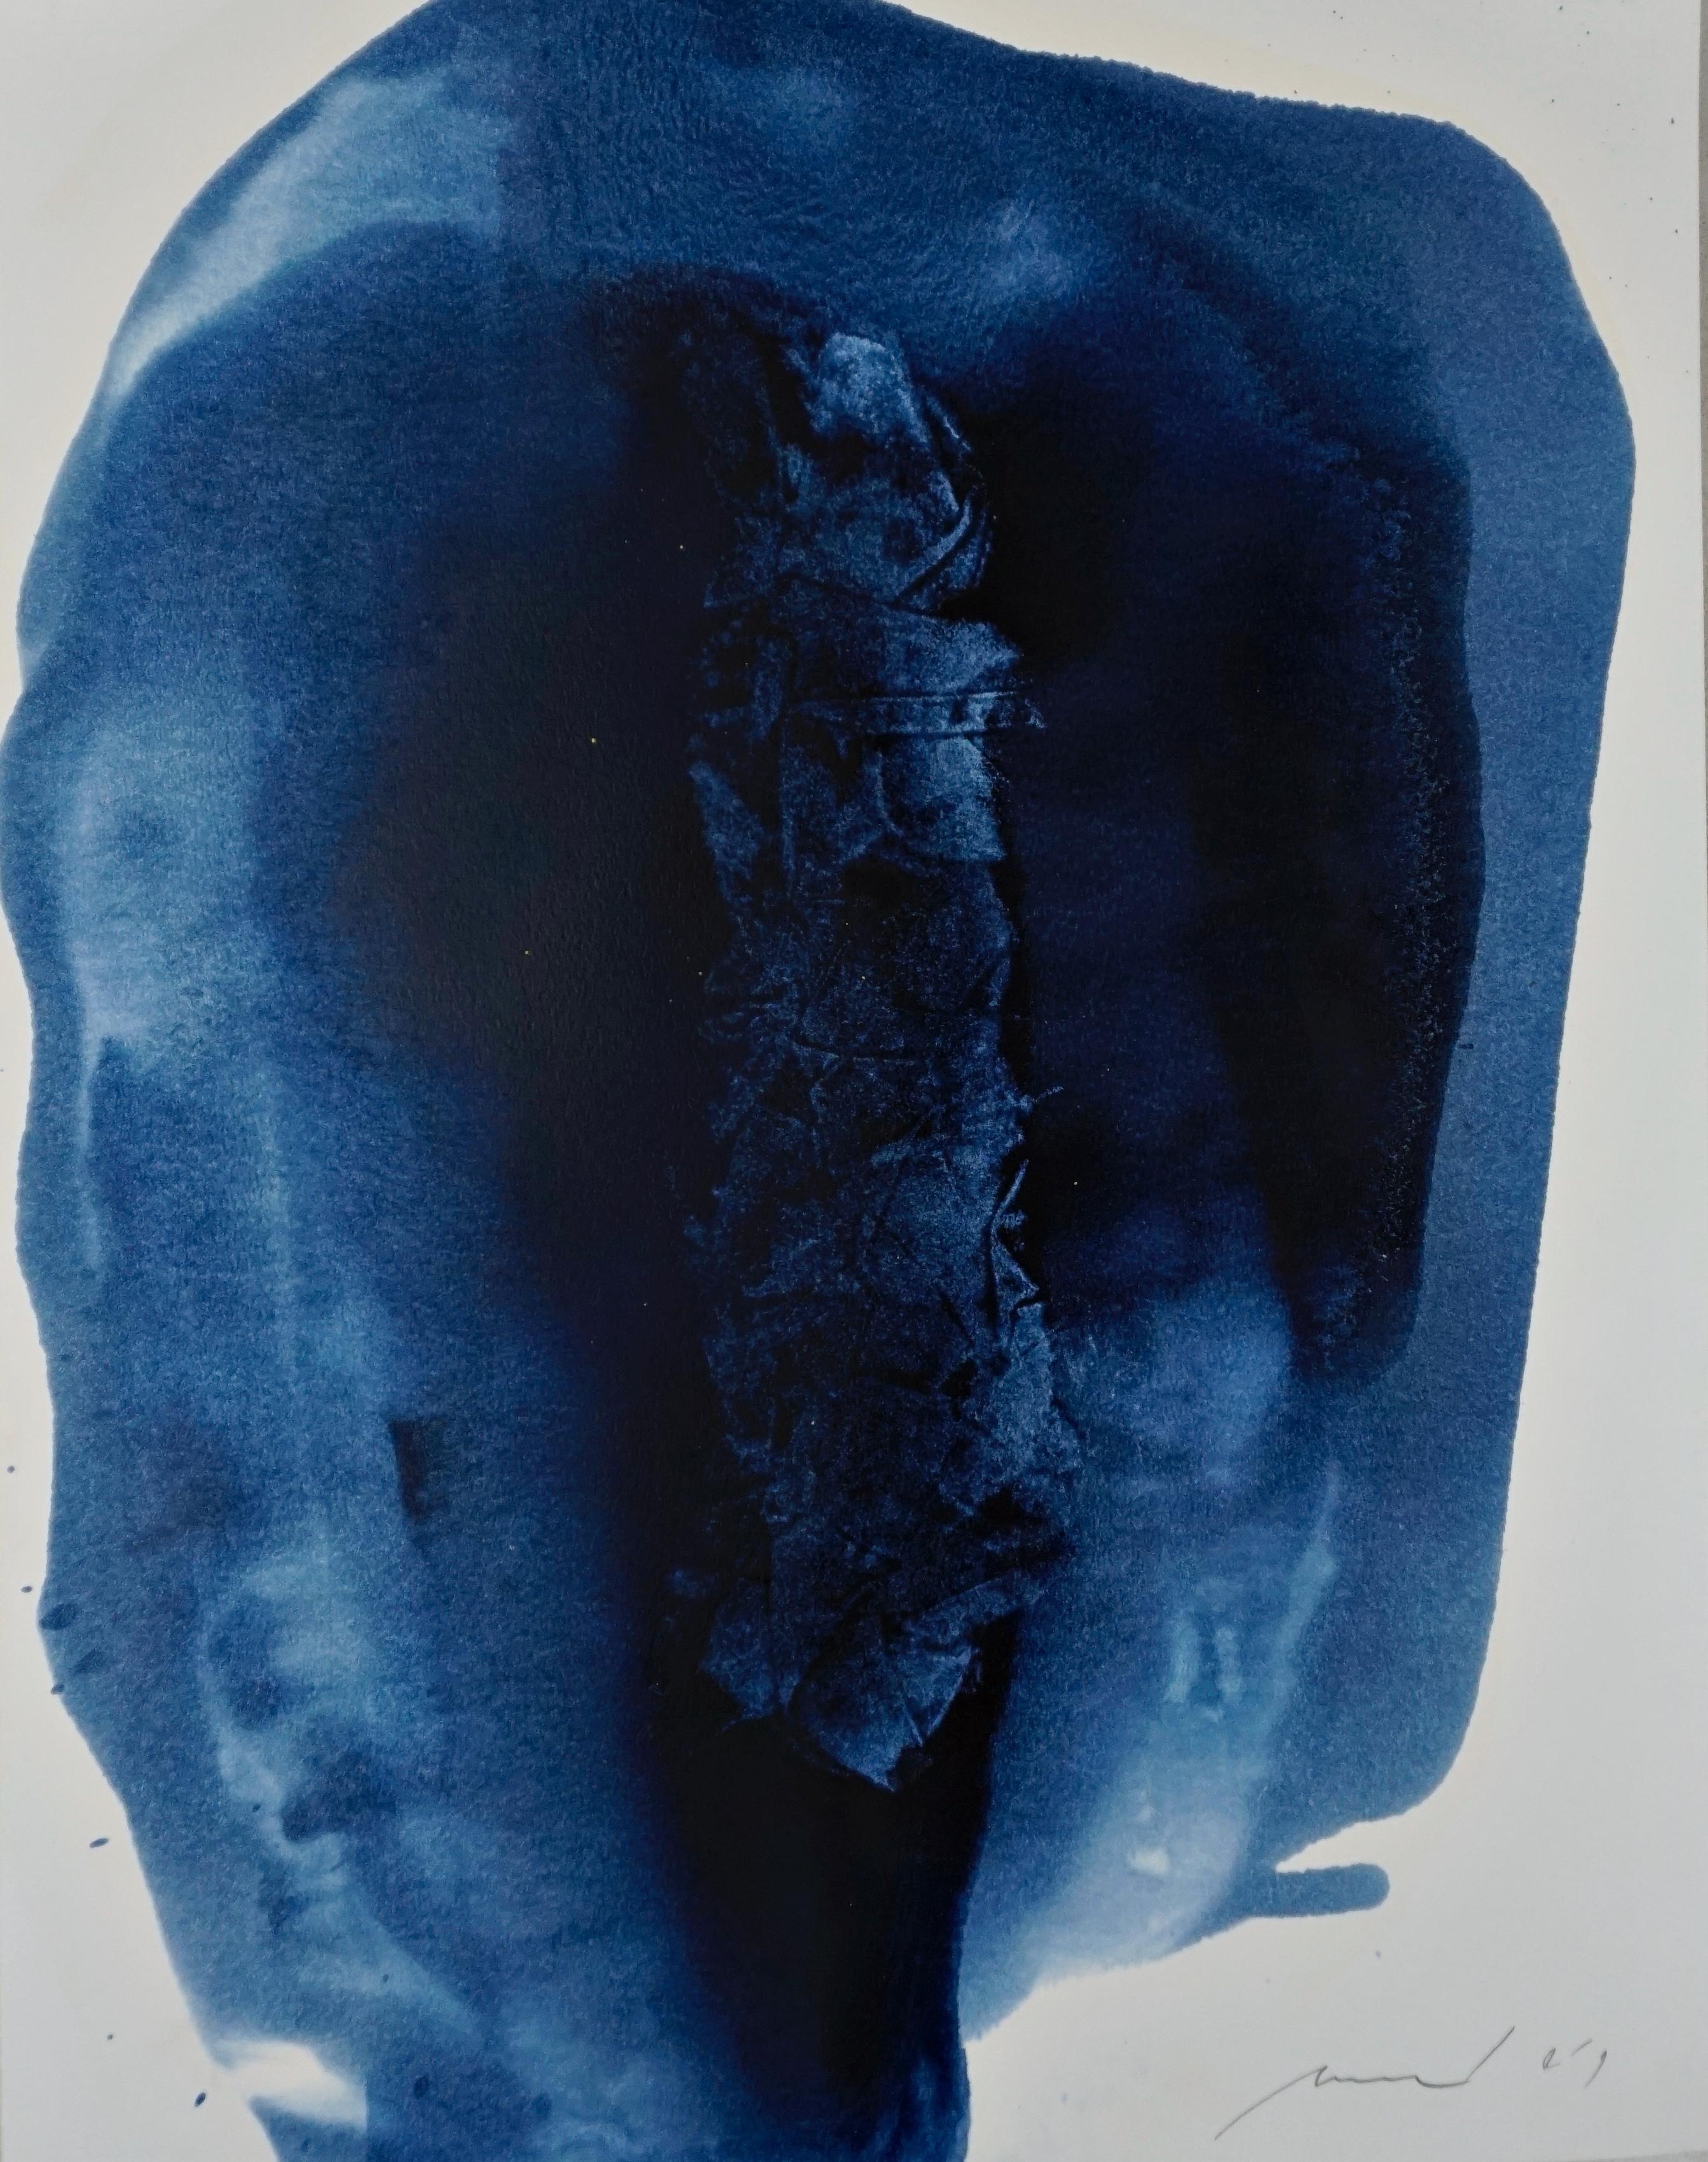 Öl auf Papier, Moscardó, "Seltsame Orte", Contemporary abstract painting, Blau